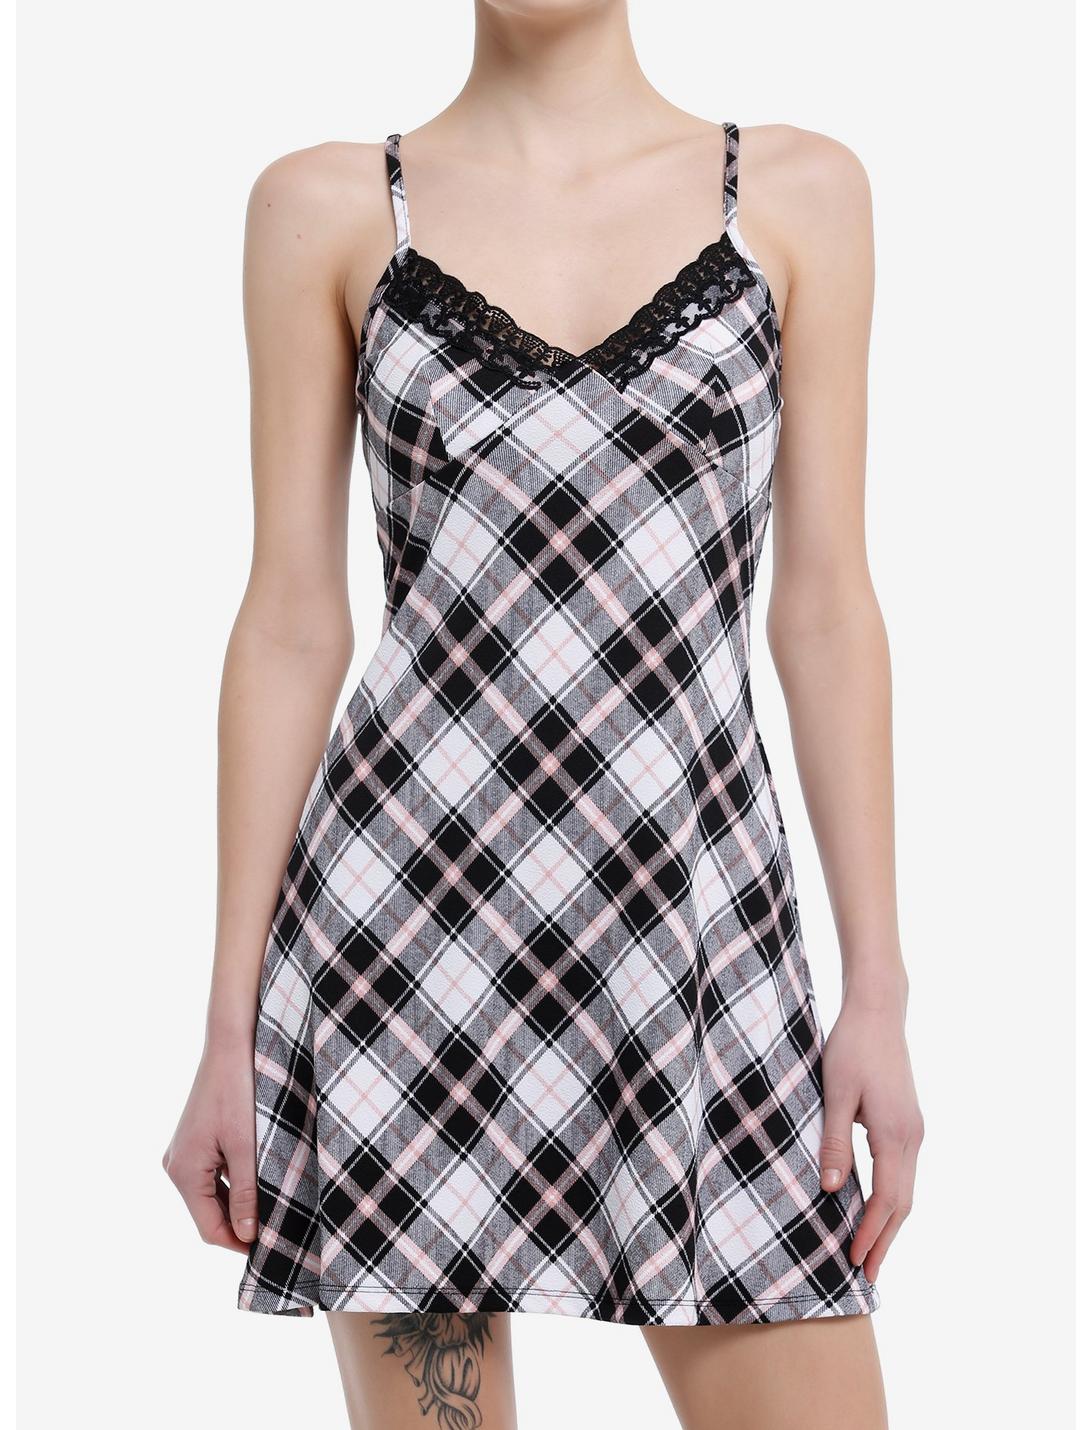 Black & Pink Plaid Lace Slip Dress, , hi-res